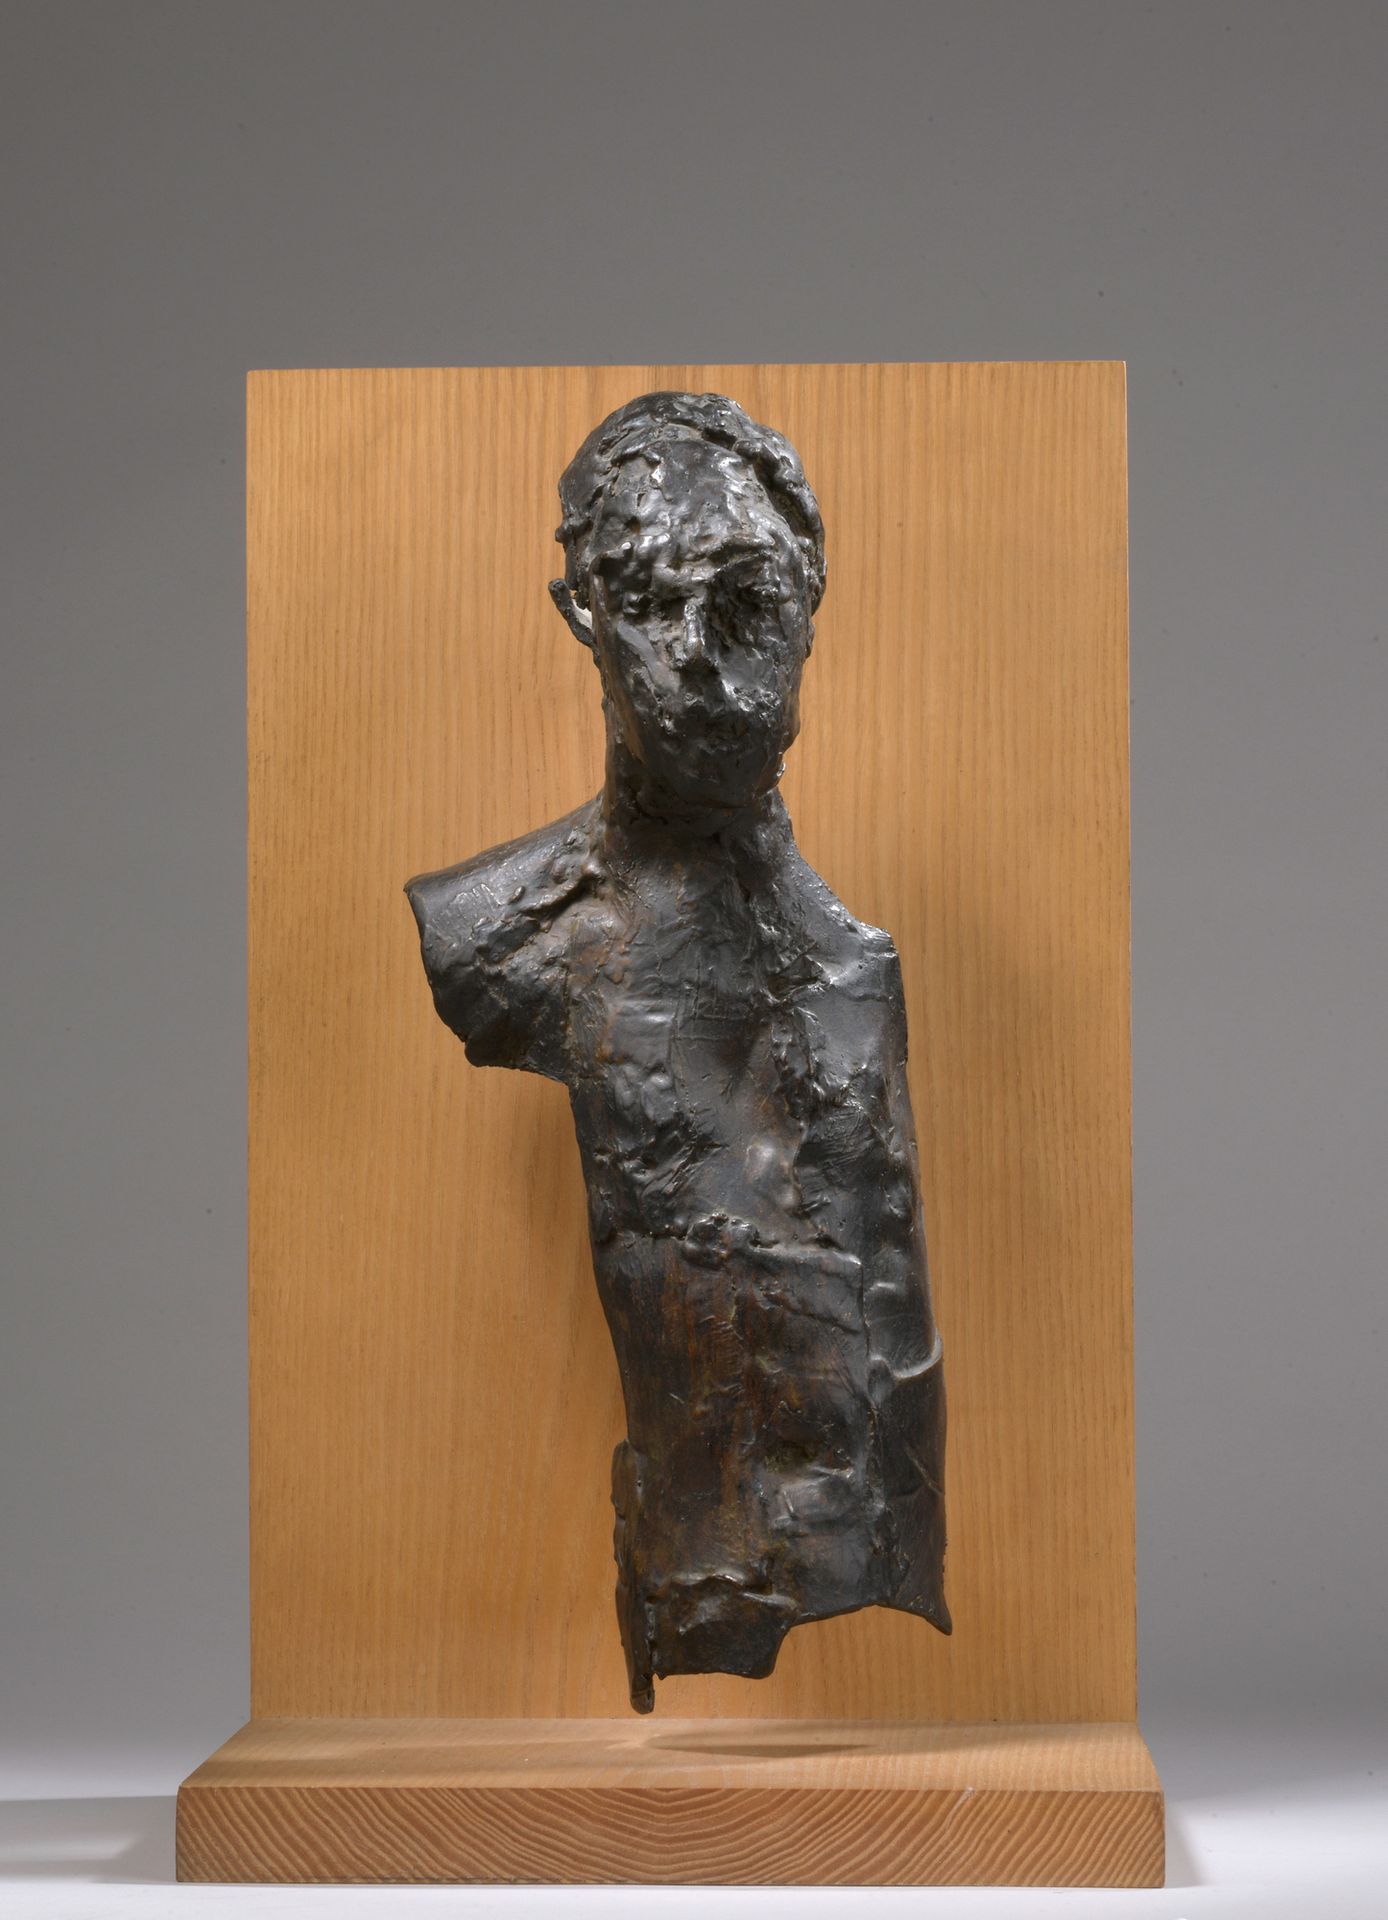 Null 伊利奥-西格诺里（生于1929年

无题

青铜，有深色的铜锈，签名和编号为4/8。

35 x 13 x 12 厘米